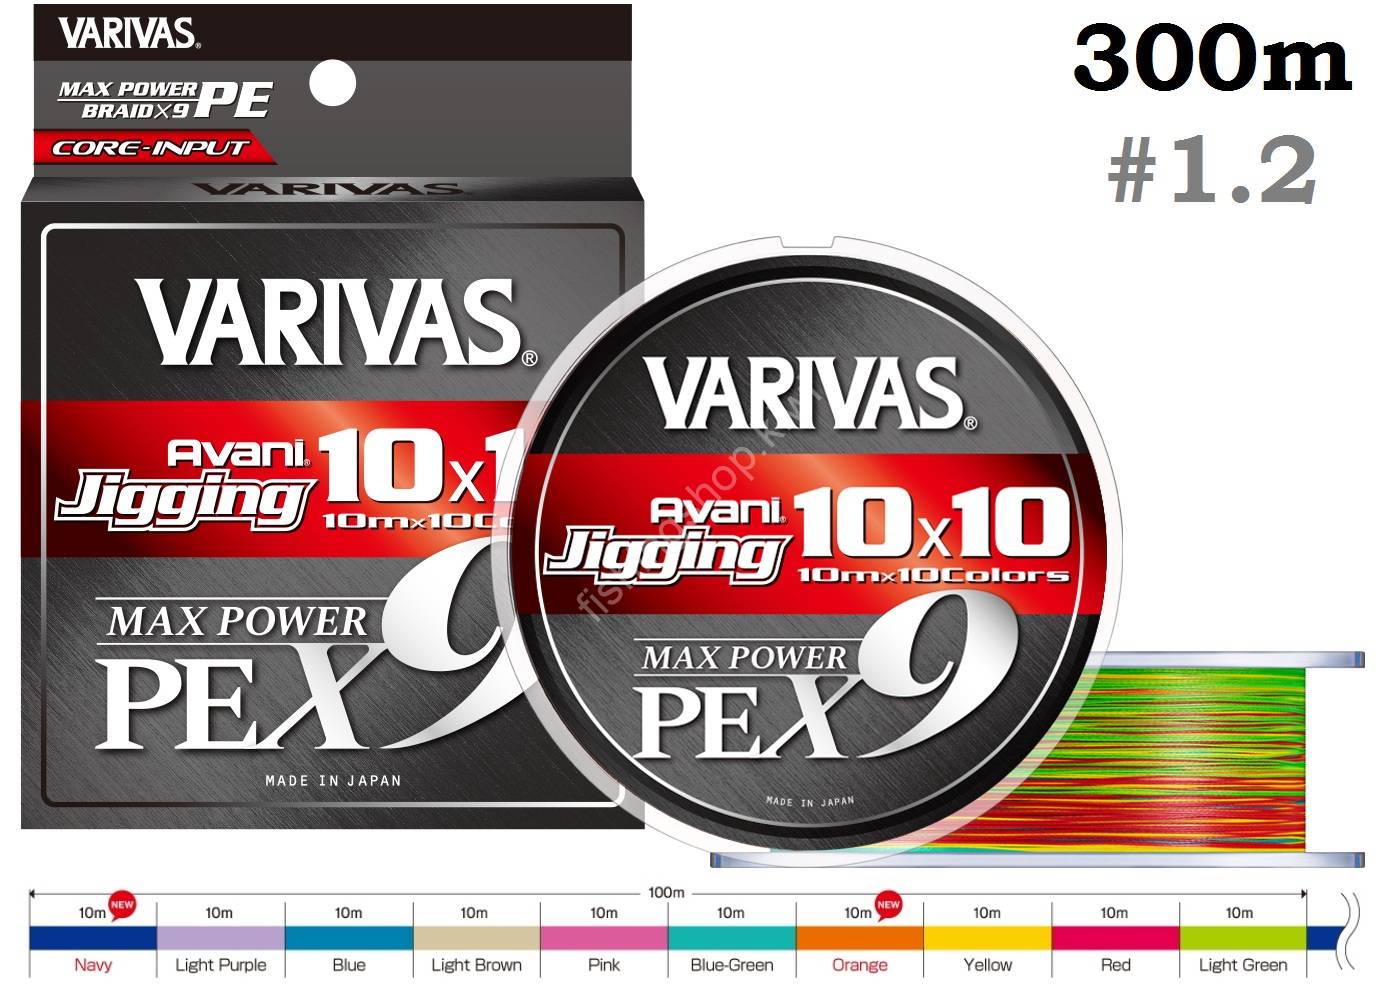 VARIVAS Avani Jigging 10×10 Max Power PE x9 [10m x 10color Marking